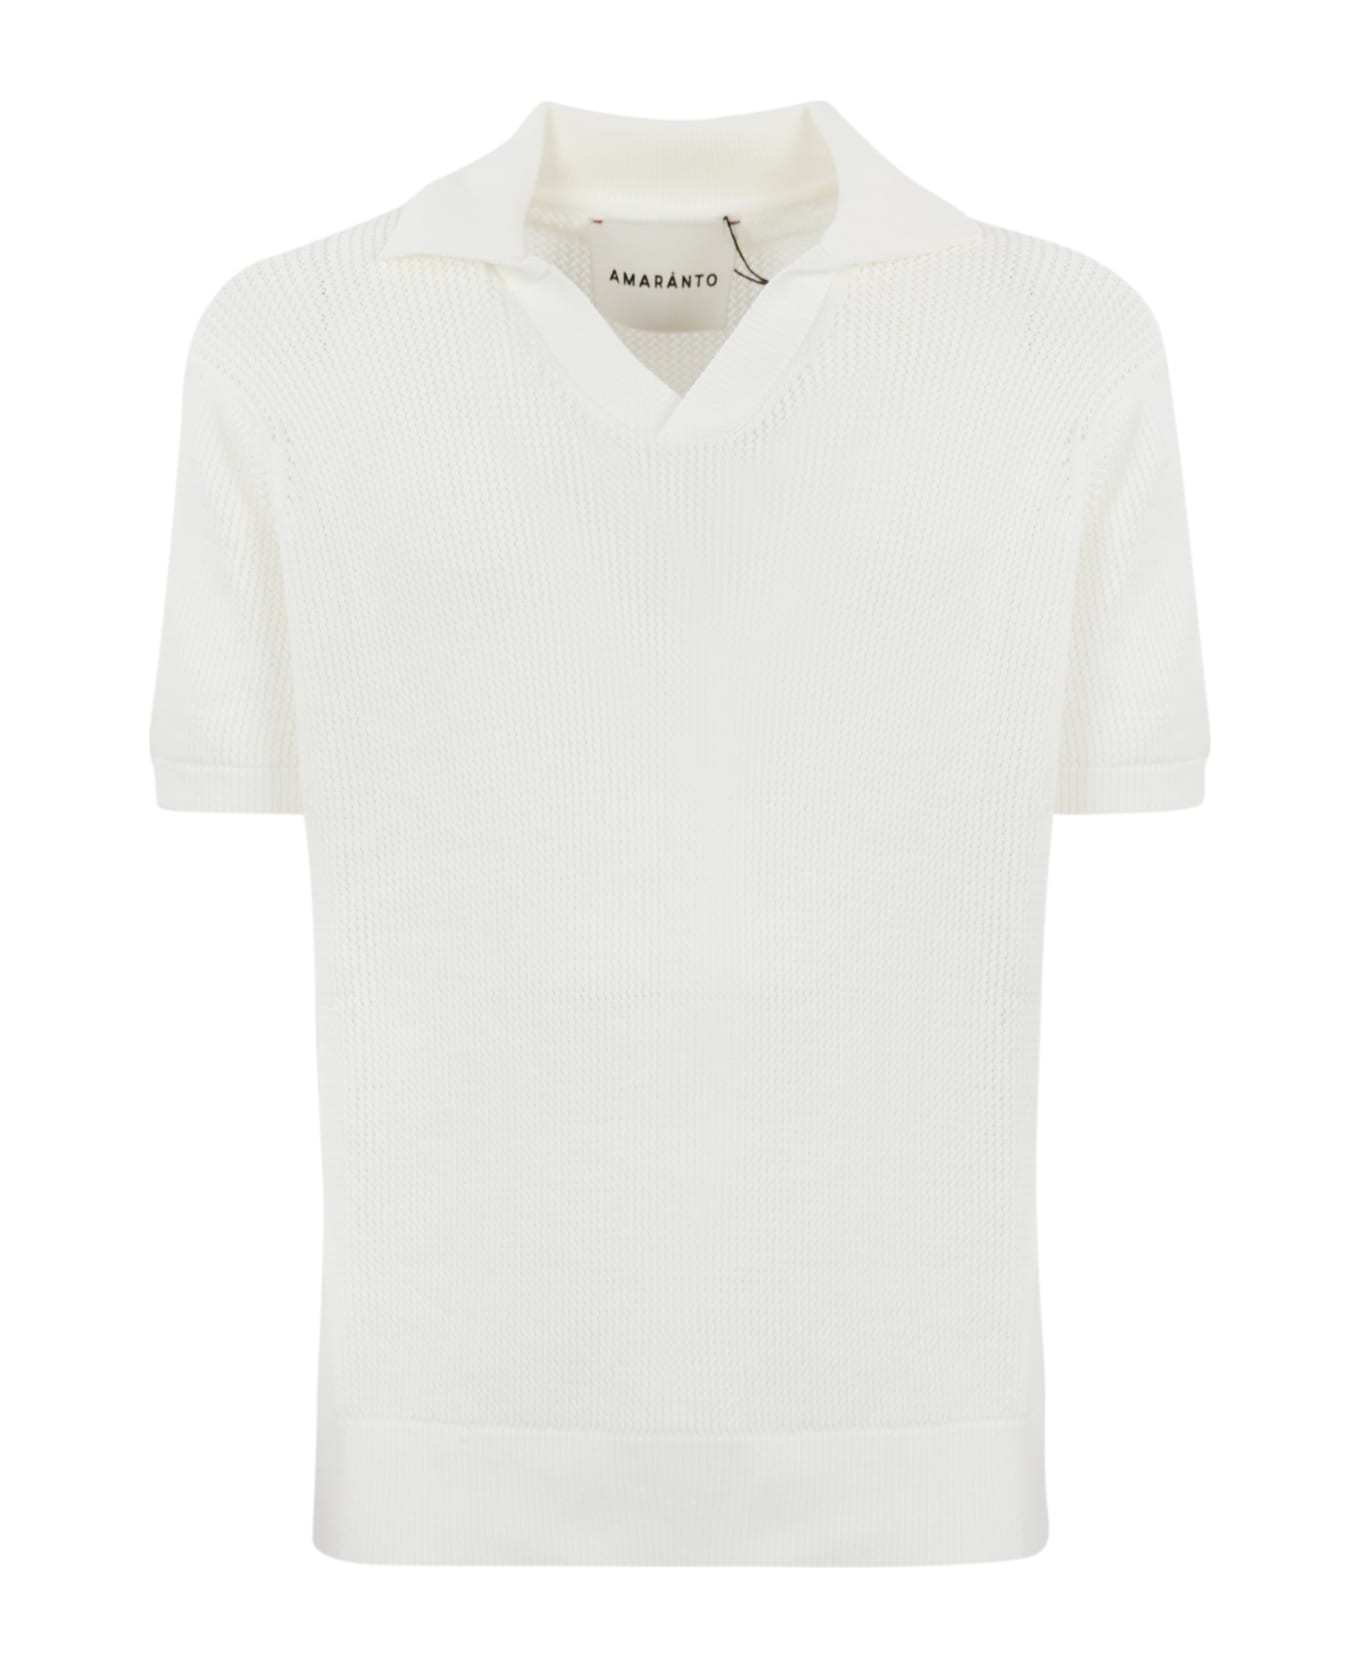 Amaranto Polo Style Shirt - Bianco